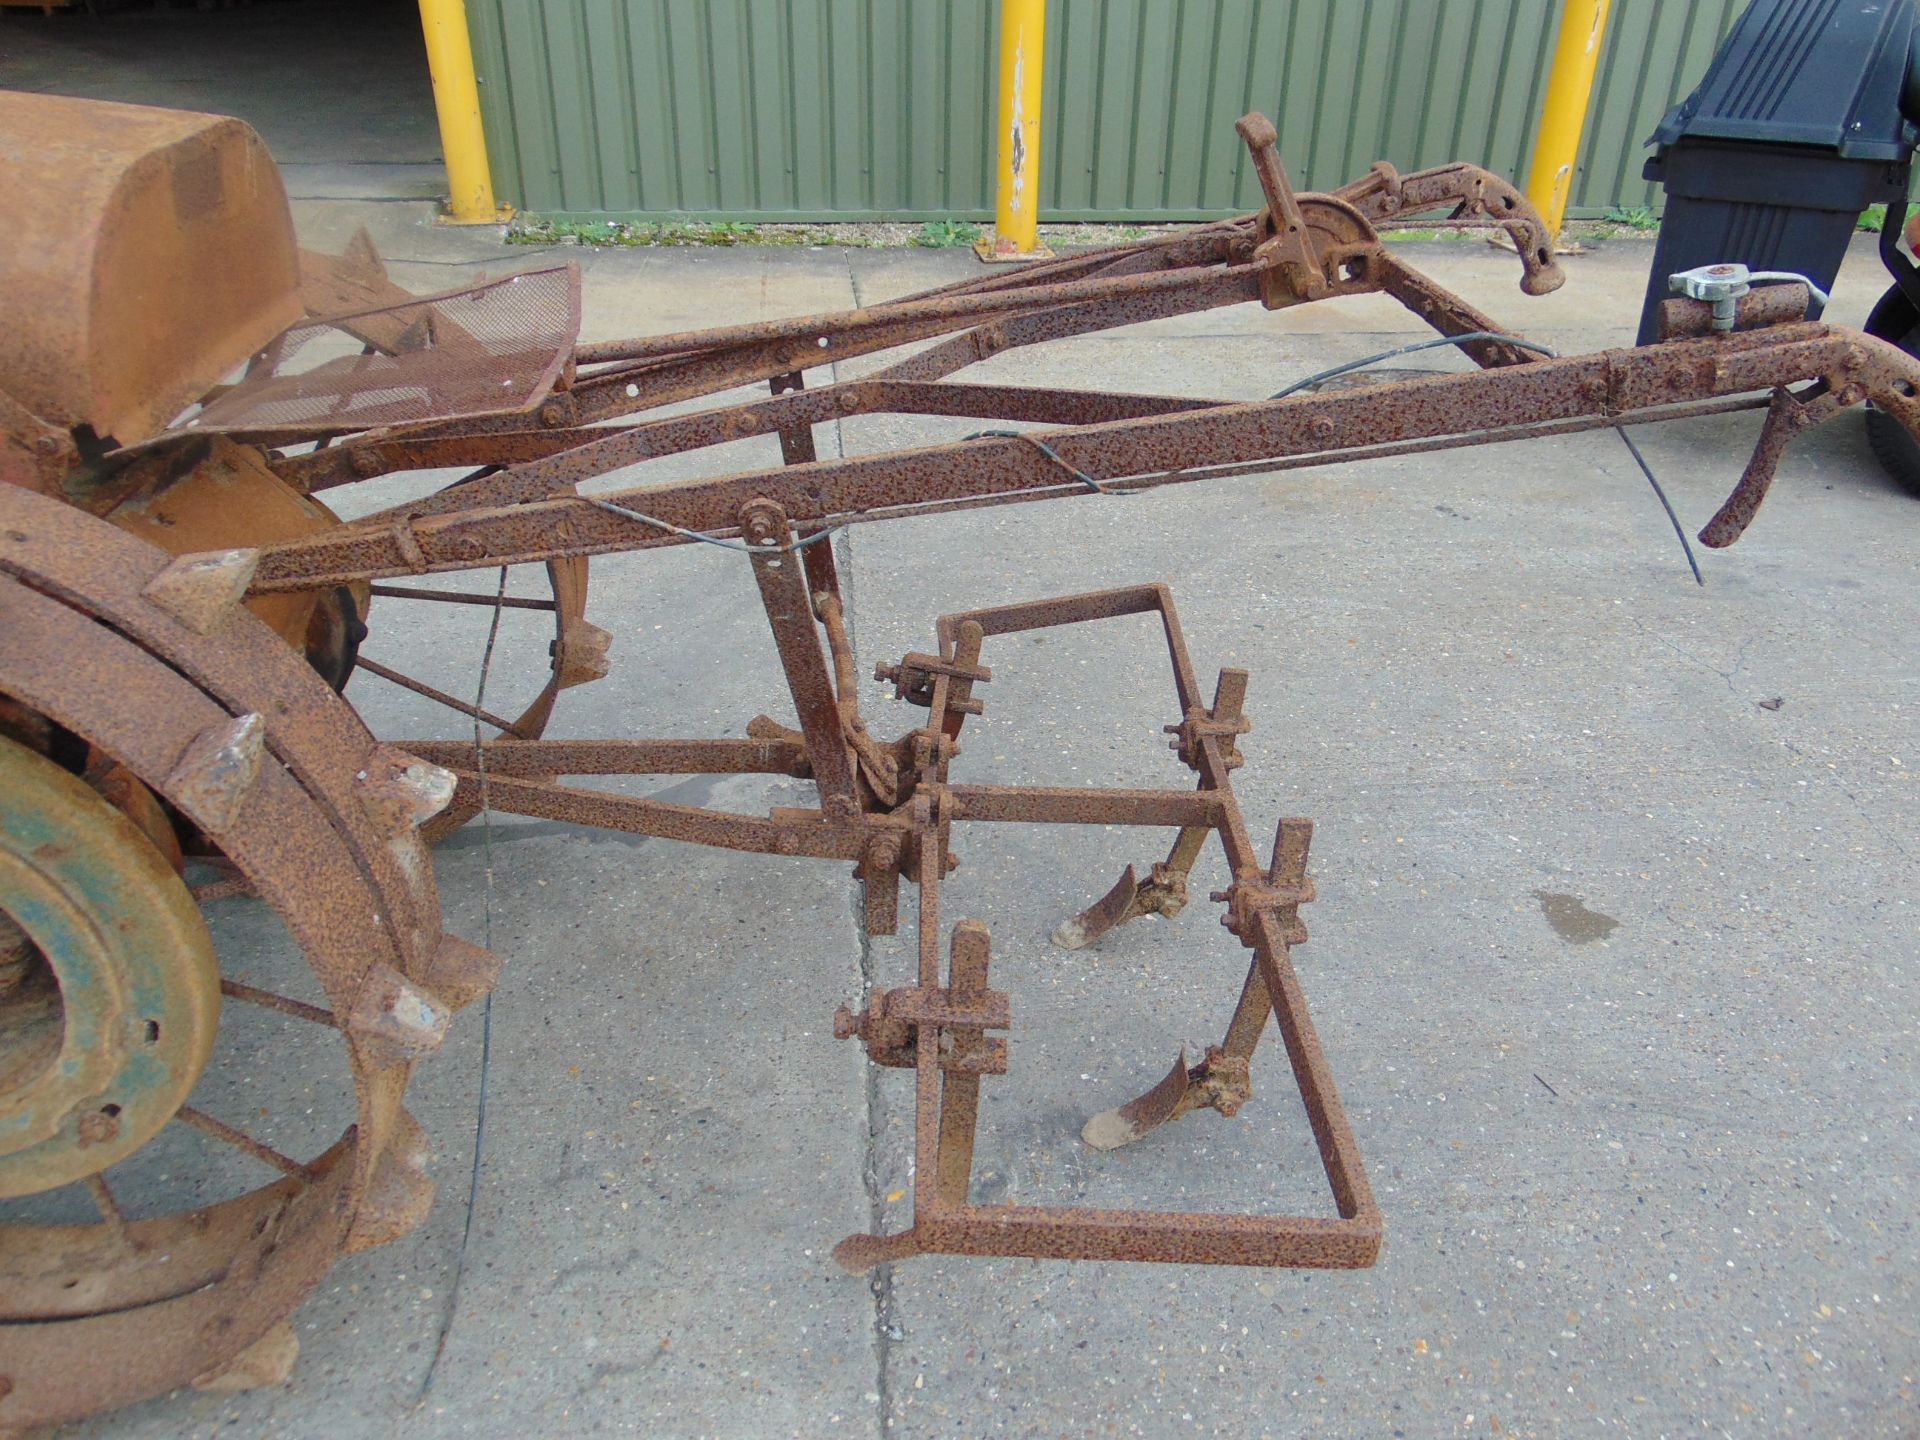 V. Rare Vintage BMB Plough Mate c/w set of Original Implements - Image 11 of 13